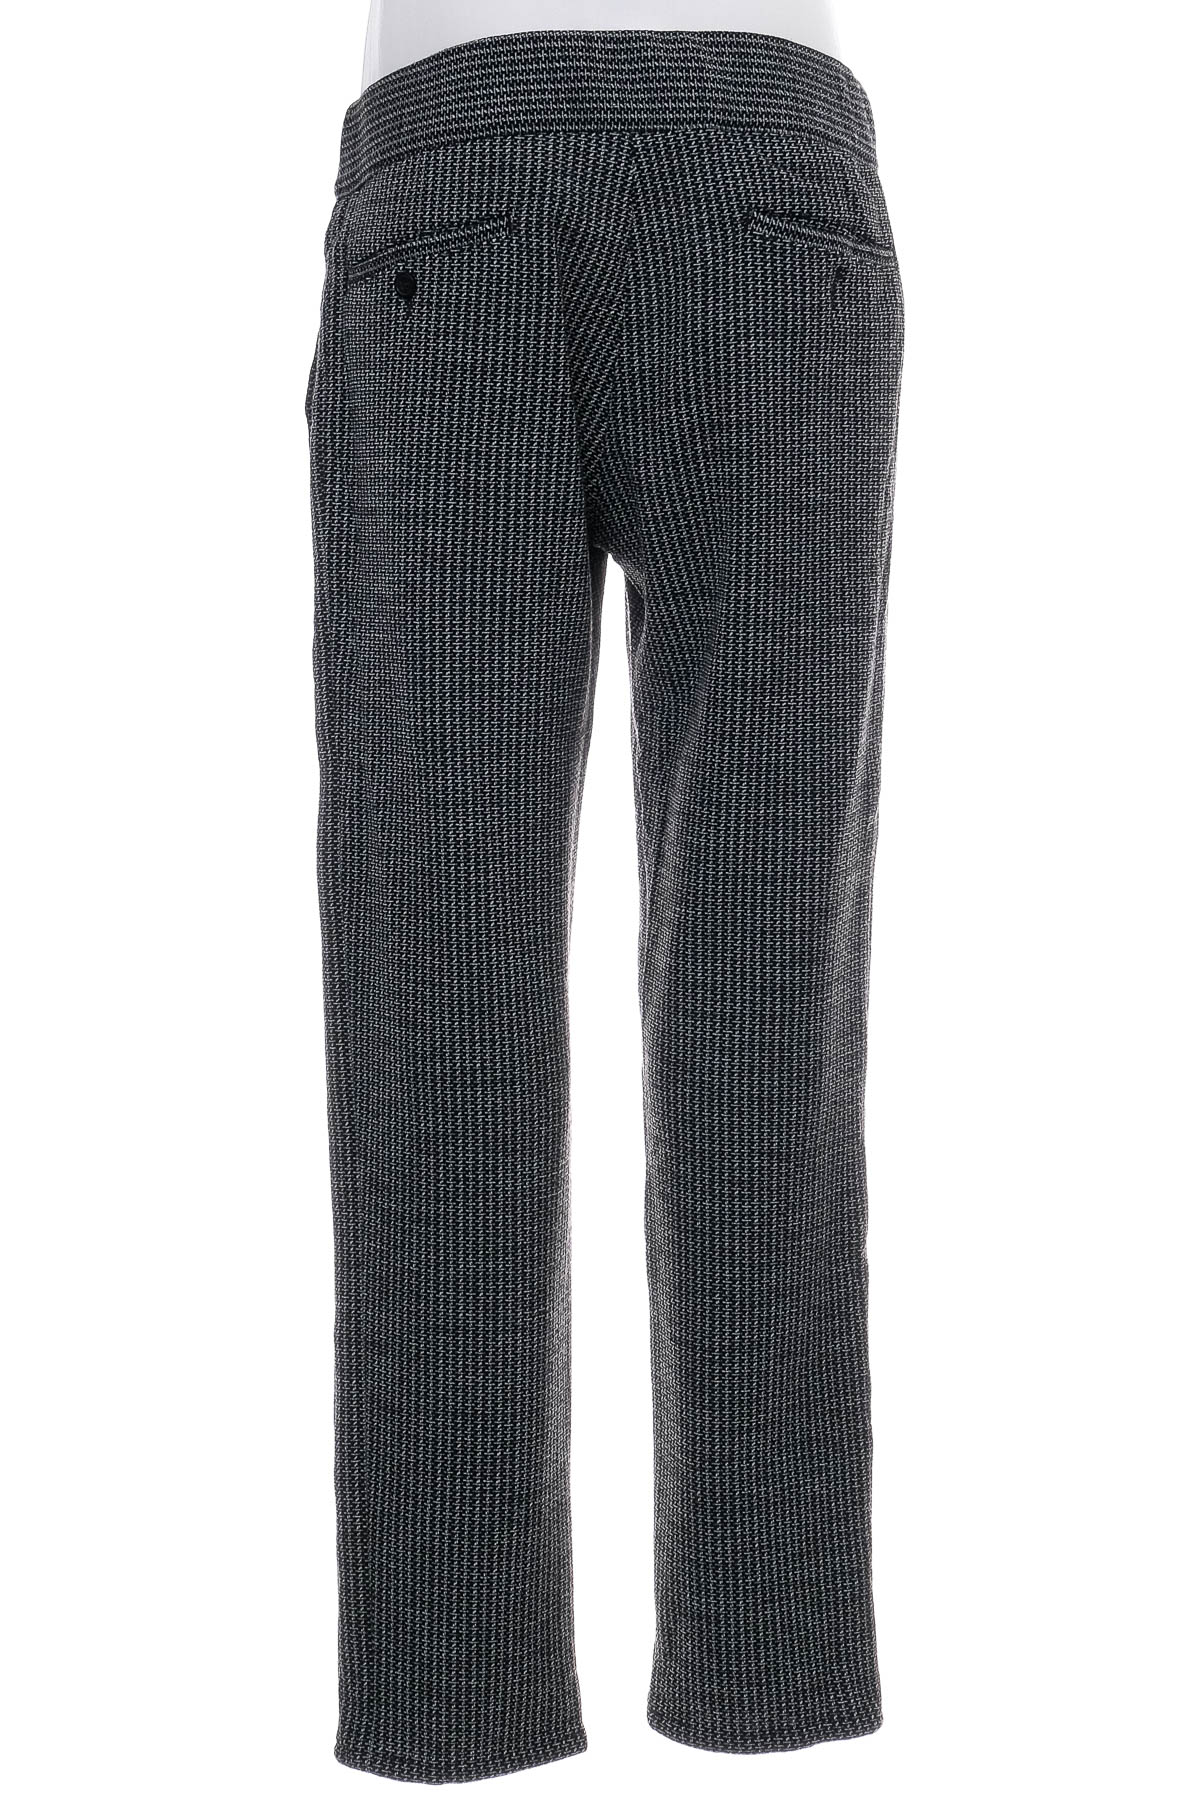 Pantalon pentru bărbați - EMPORIO ARMANI - 1